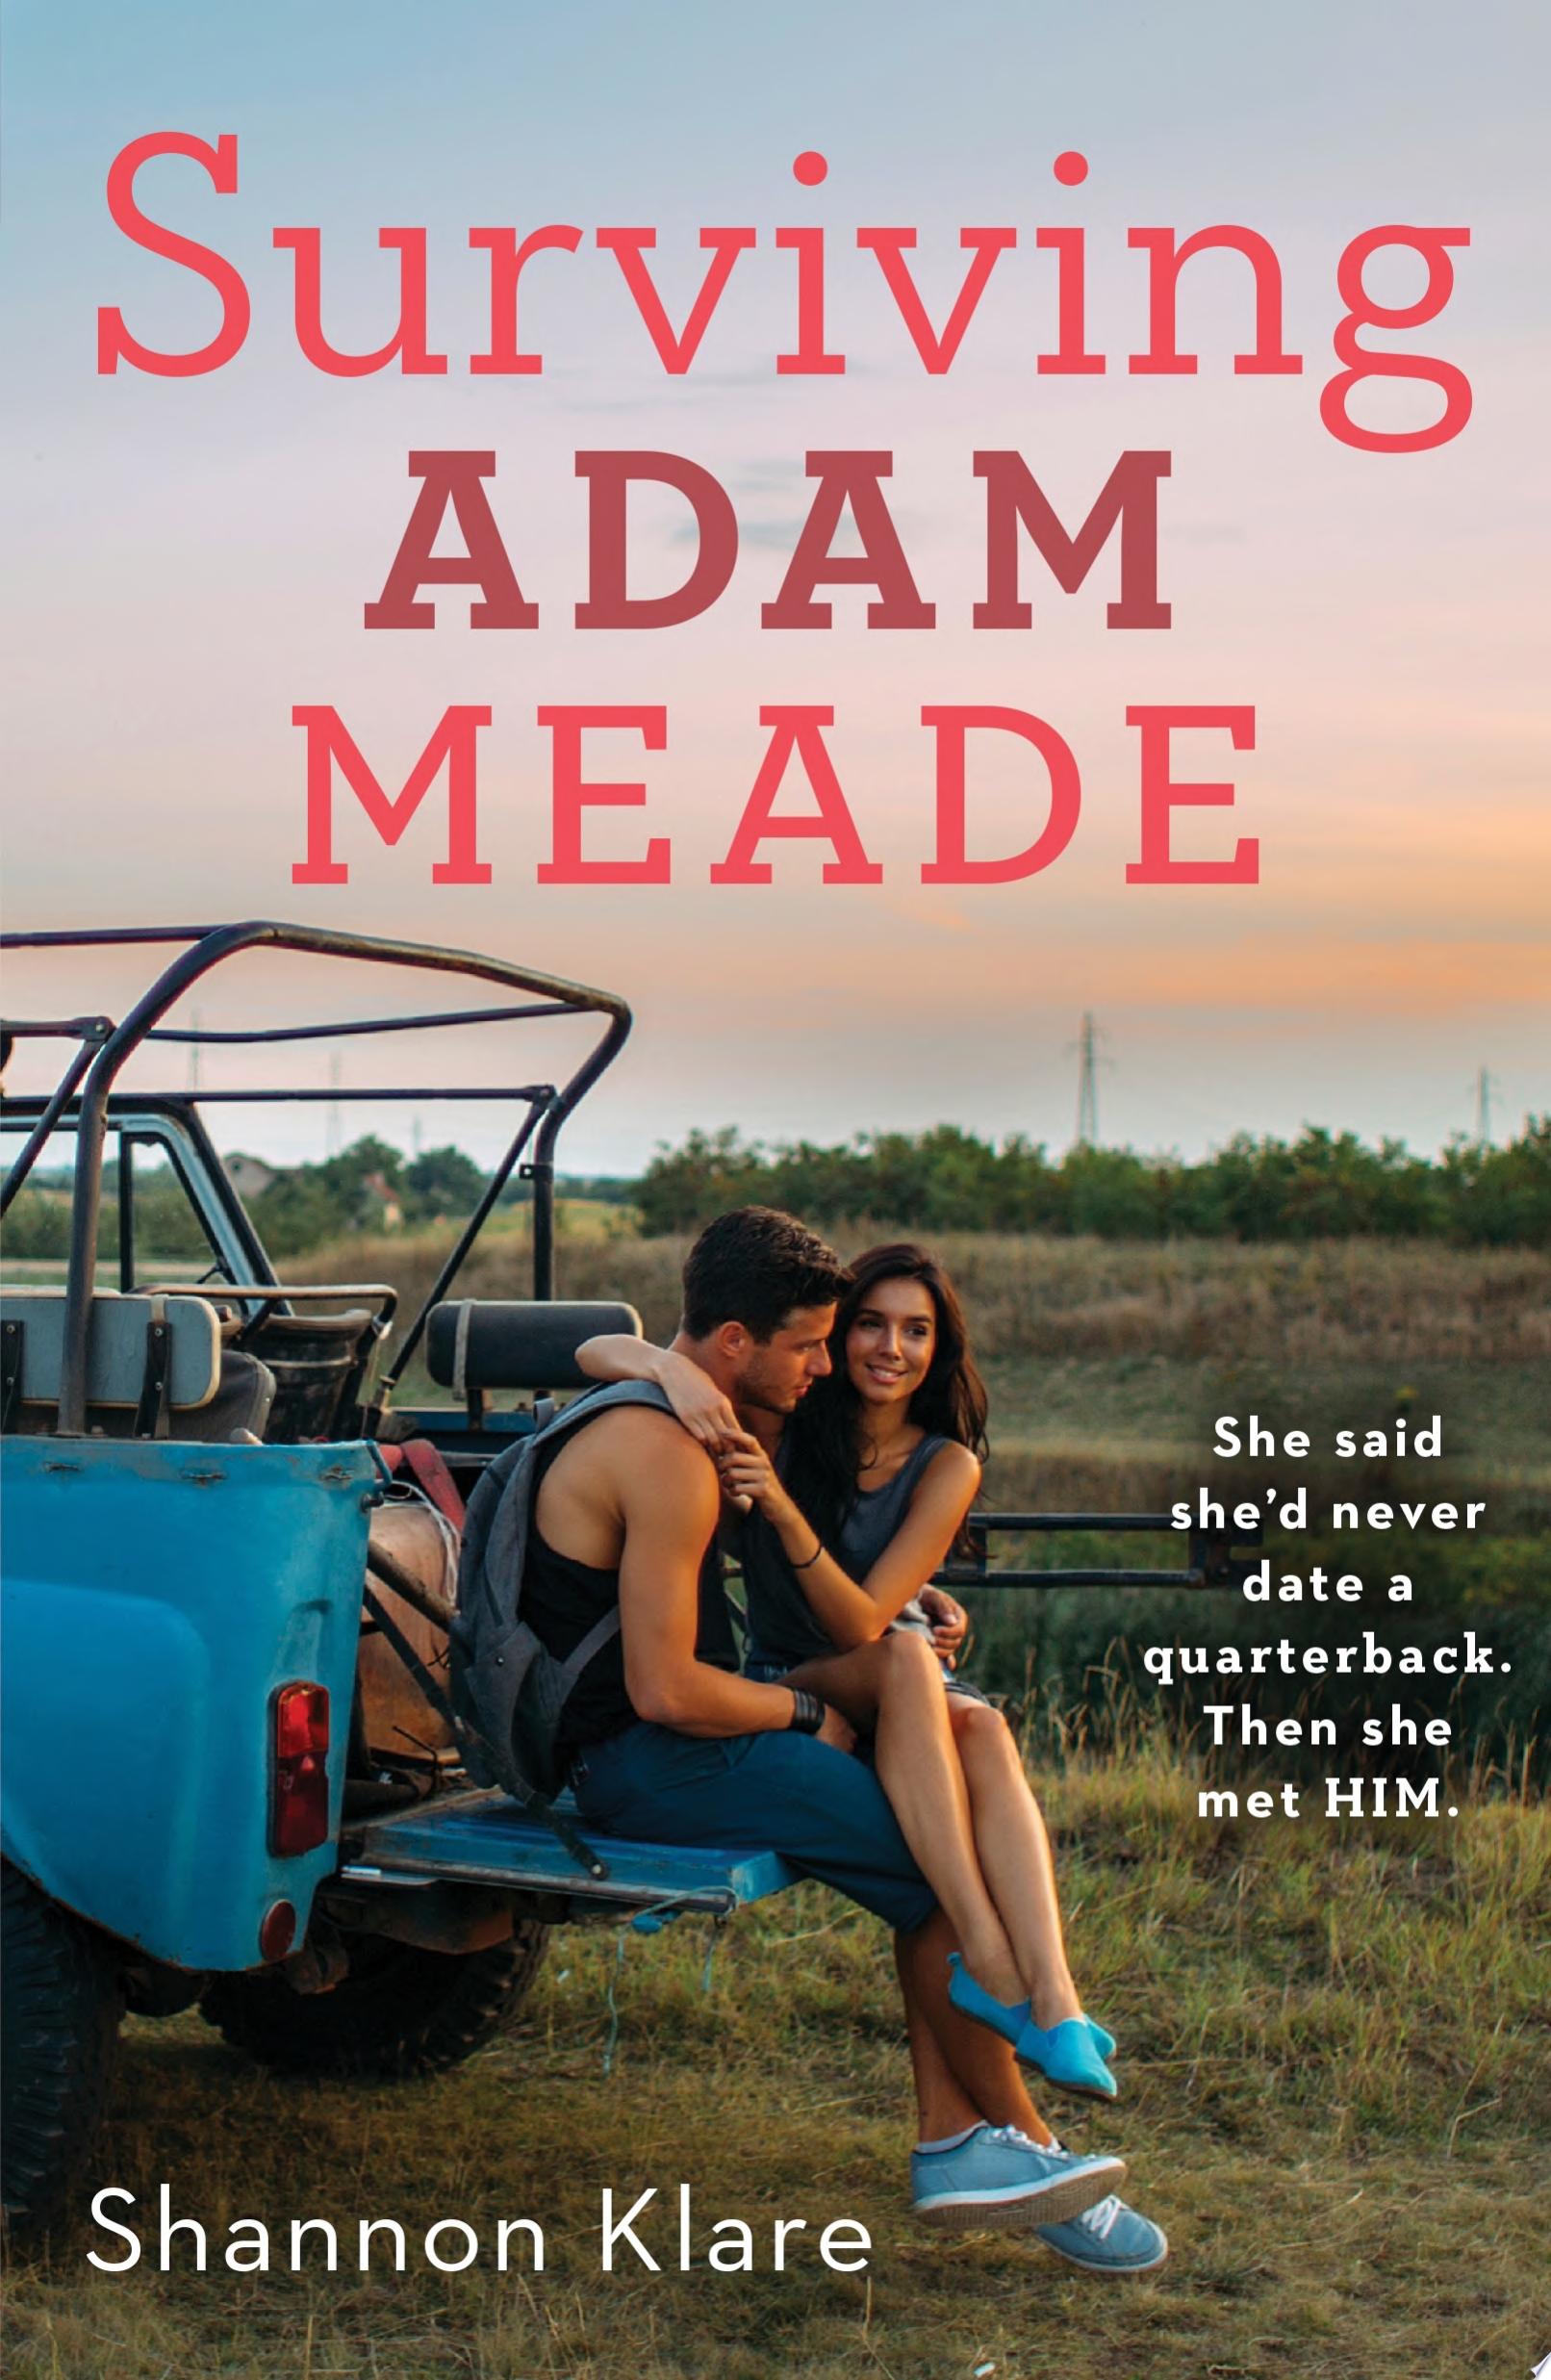 Image for "Surviving Adam Meade"